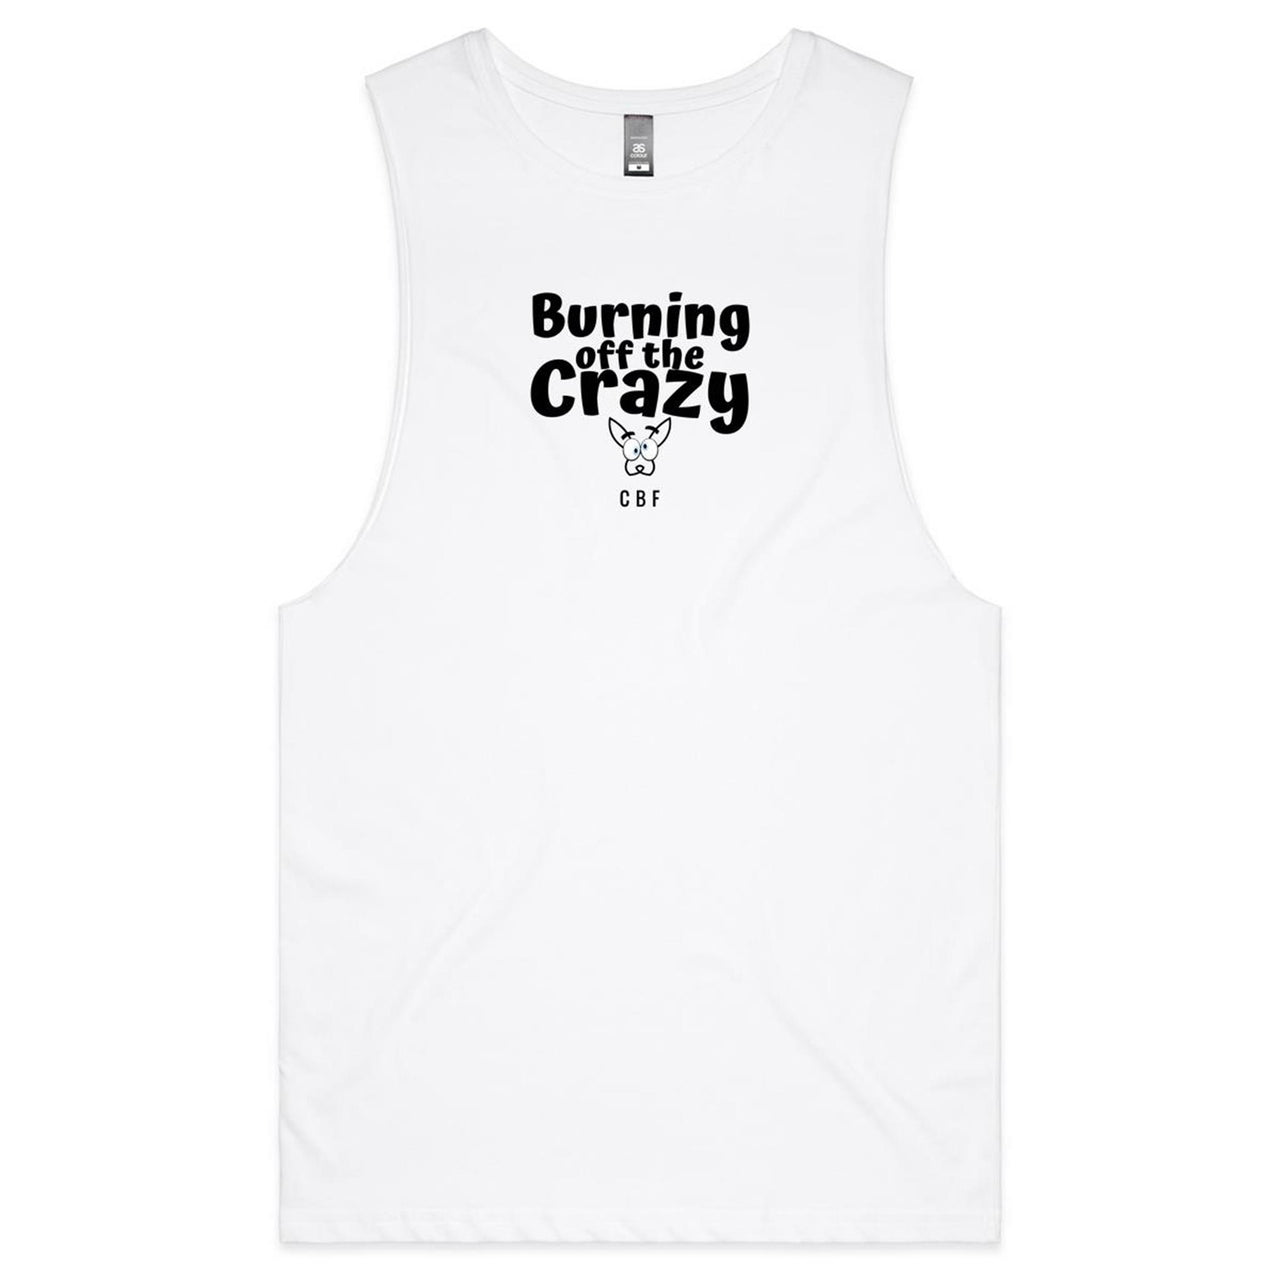 CBF Burning off the Crazy Tank Top Tee